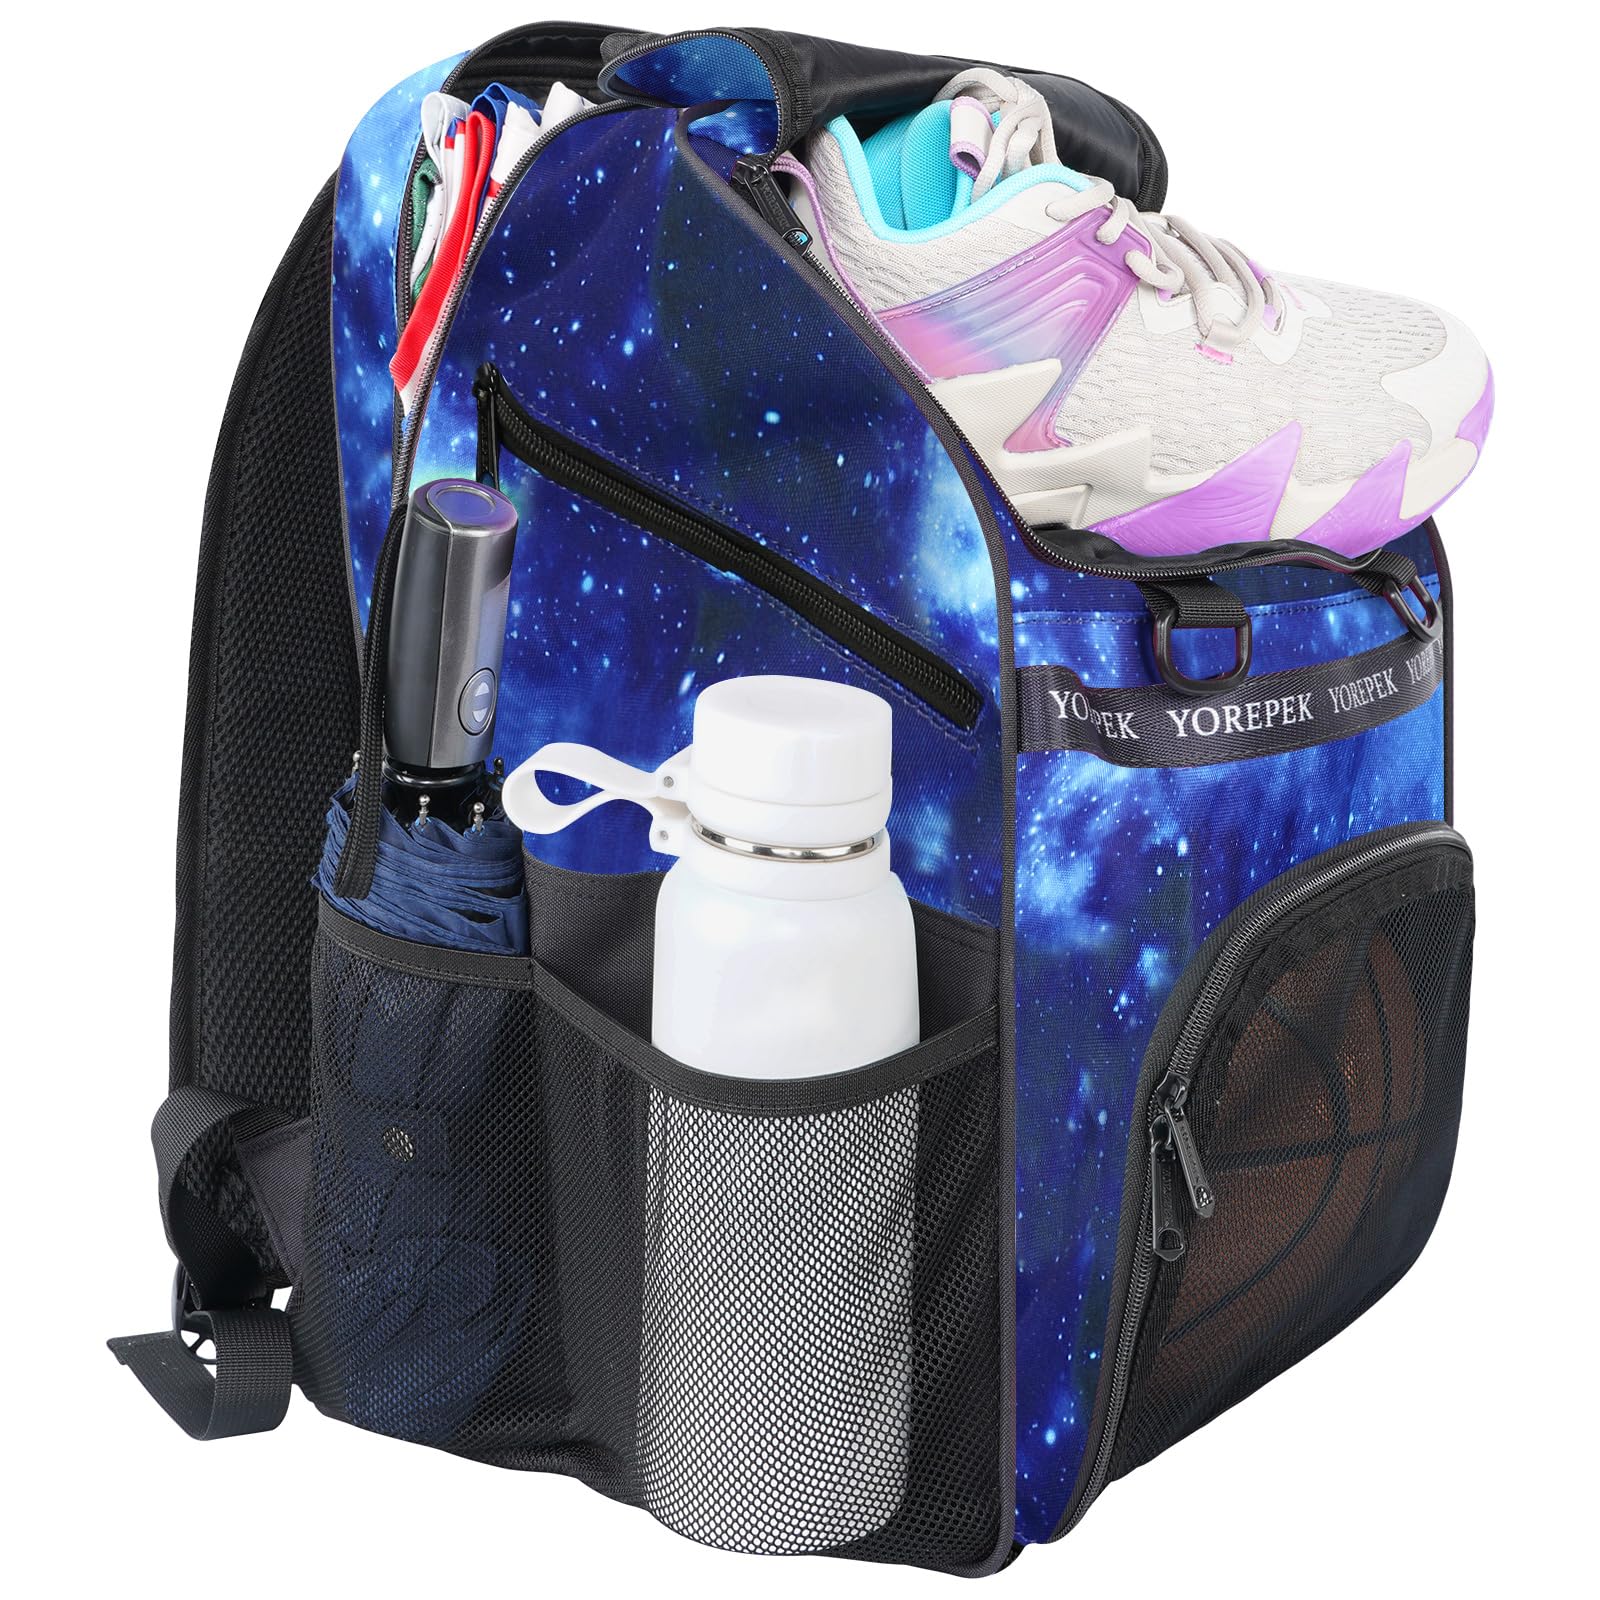 YOREPEK Travel Backpack & Basketball Bag, Extra Large 50L Laptop Backpacks for Men Women, Large Basketball Backpack with Shoe Compartment and Ball Holder, Water Resistant Backpack, Black & Star Blue